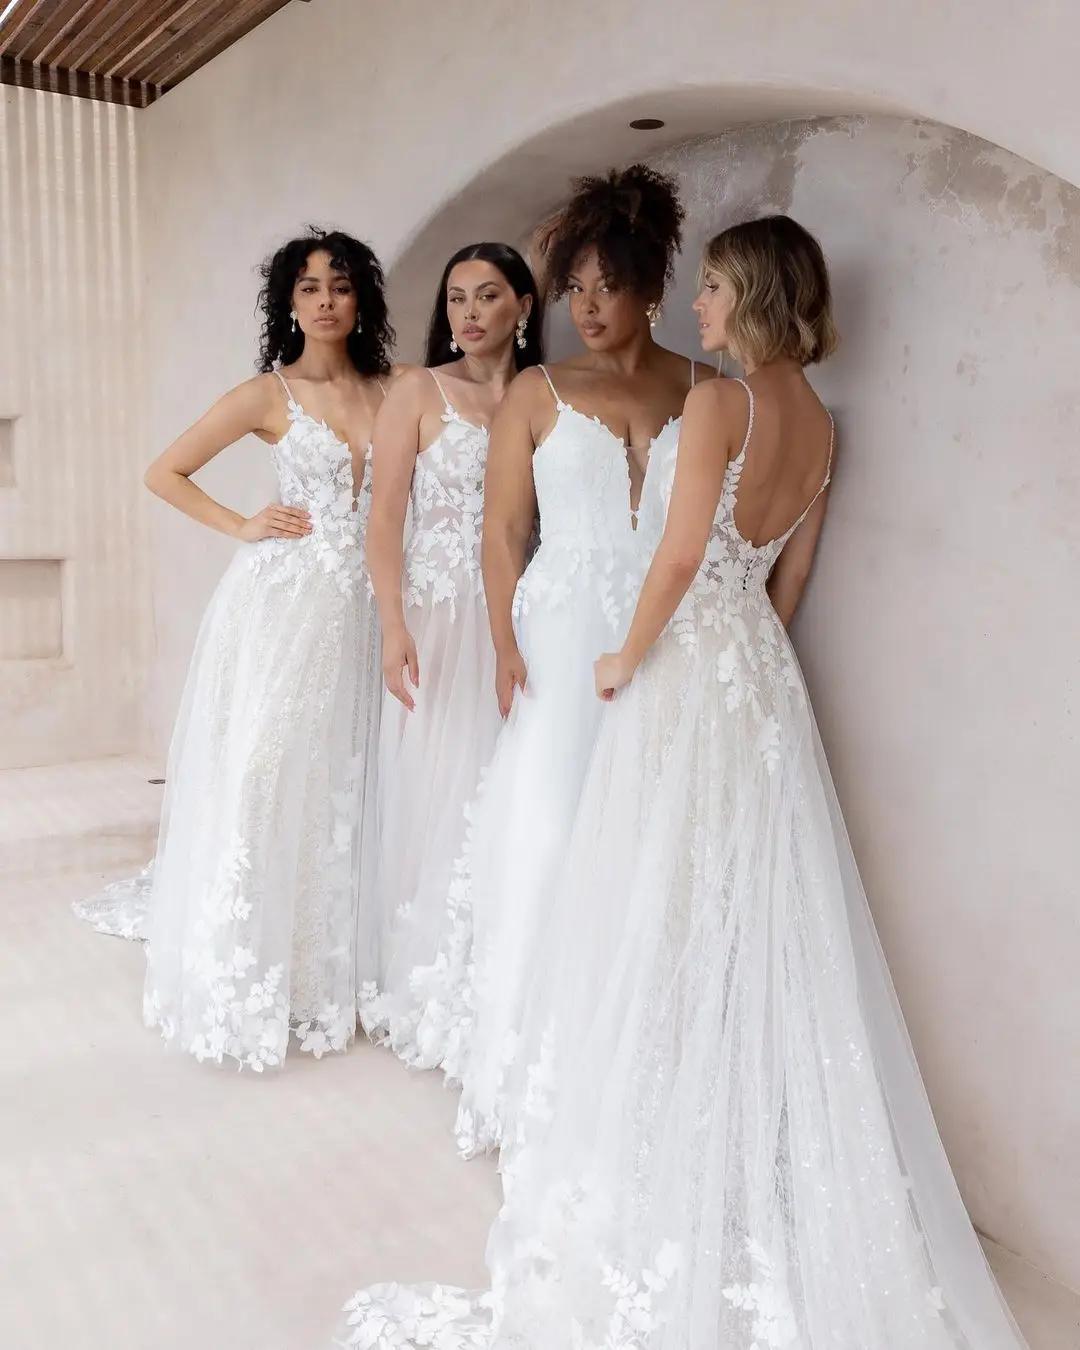 Multiple Sizes of Wedding Dresses